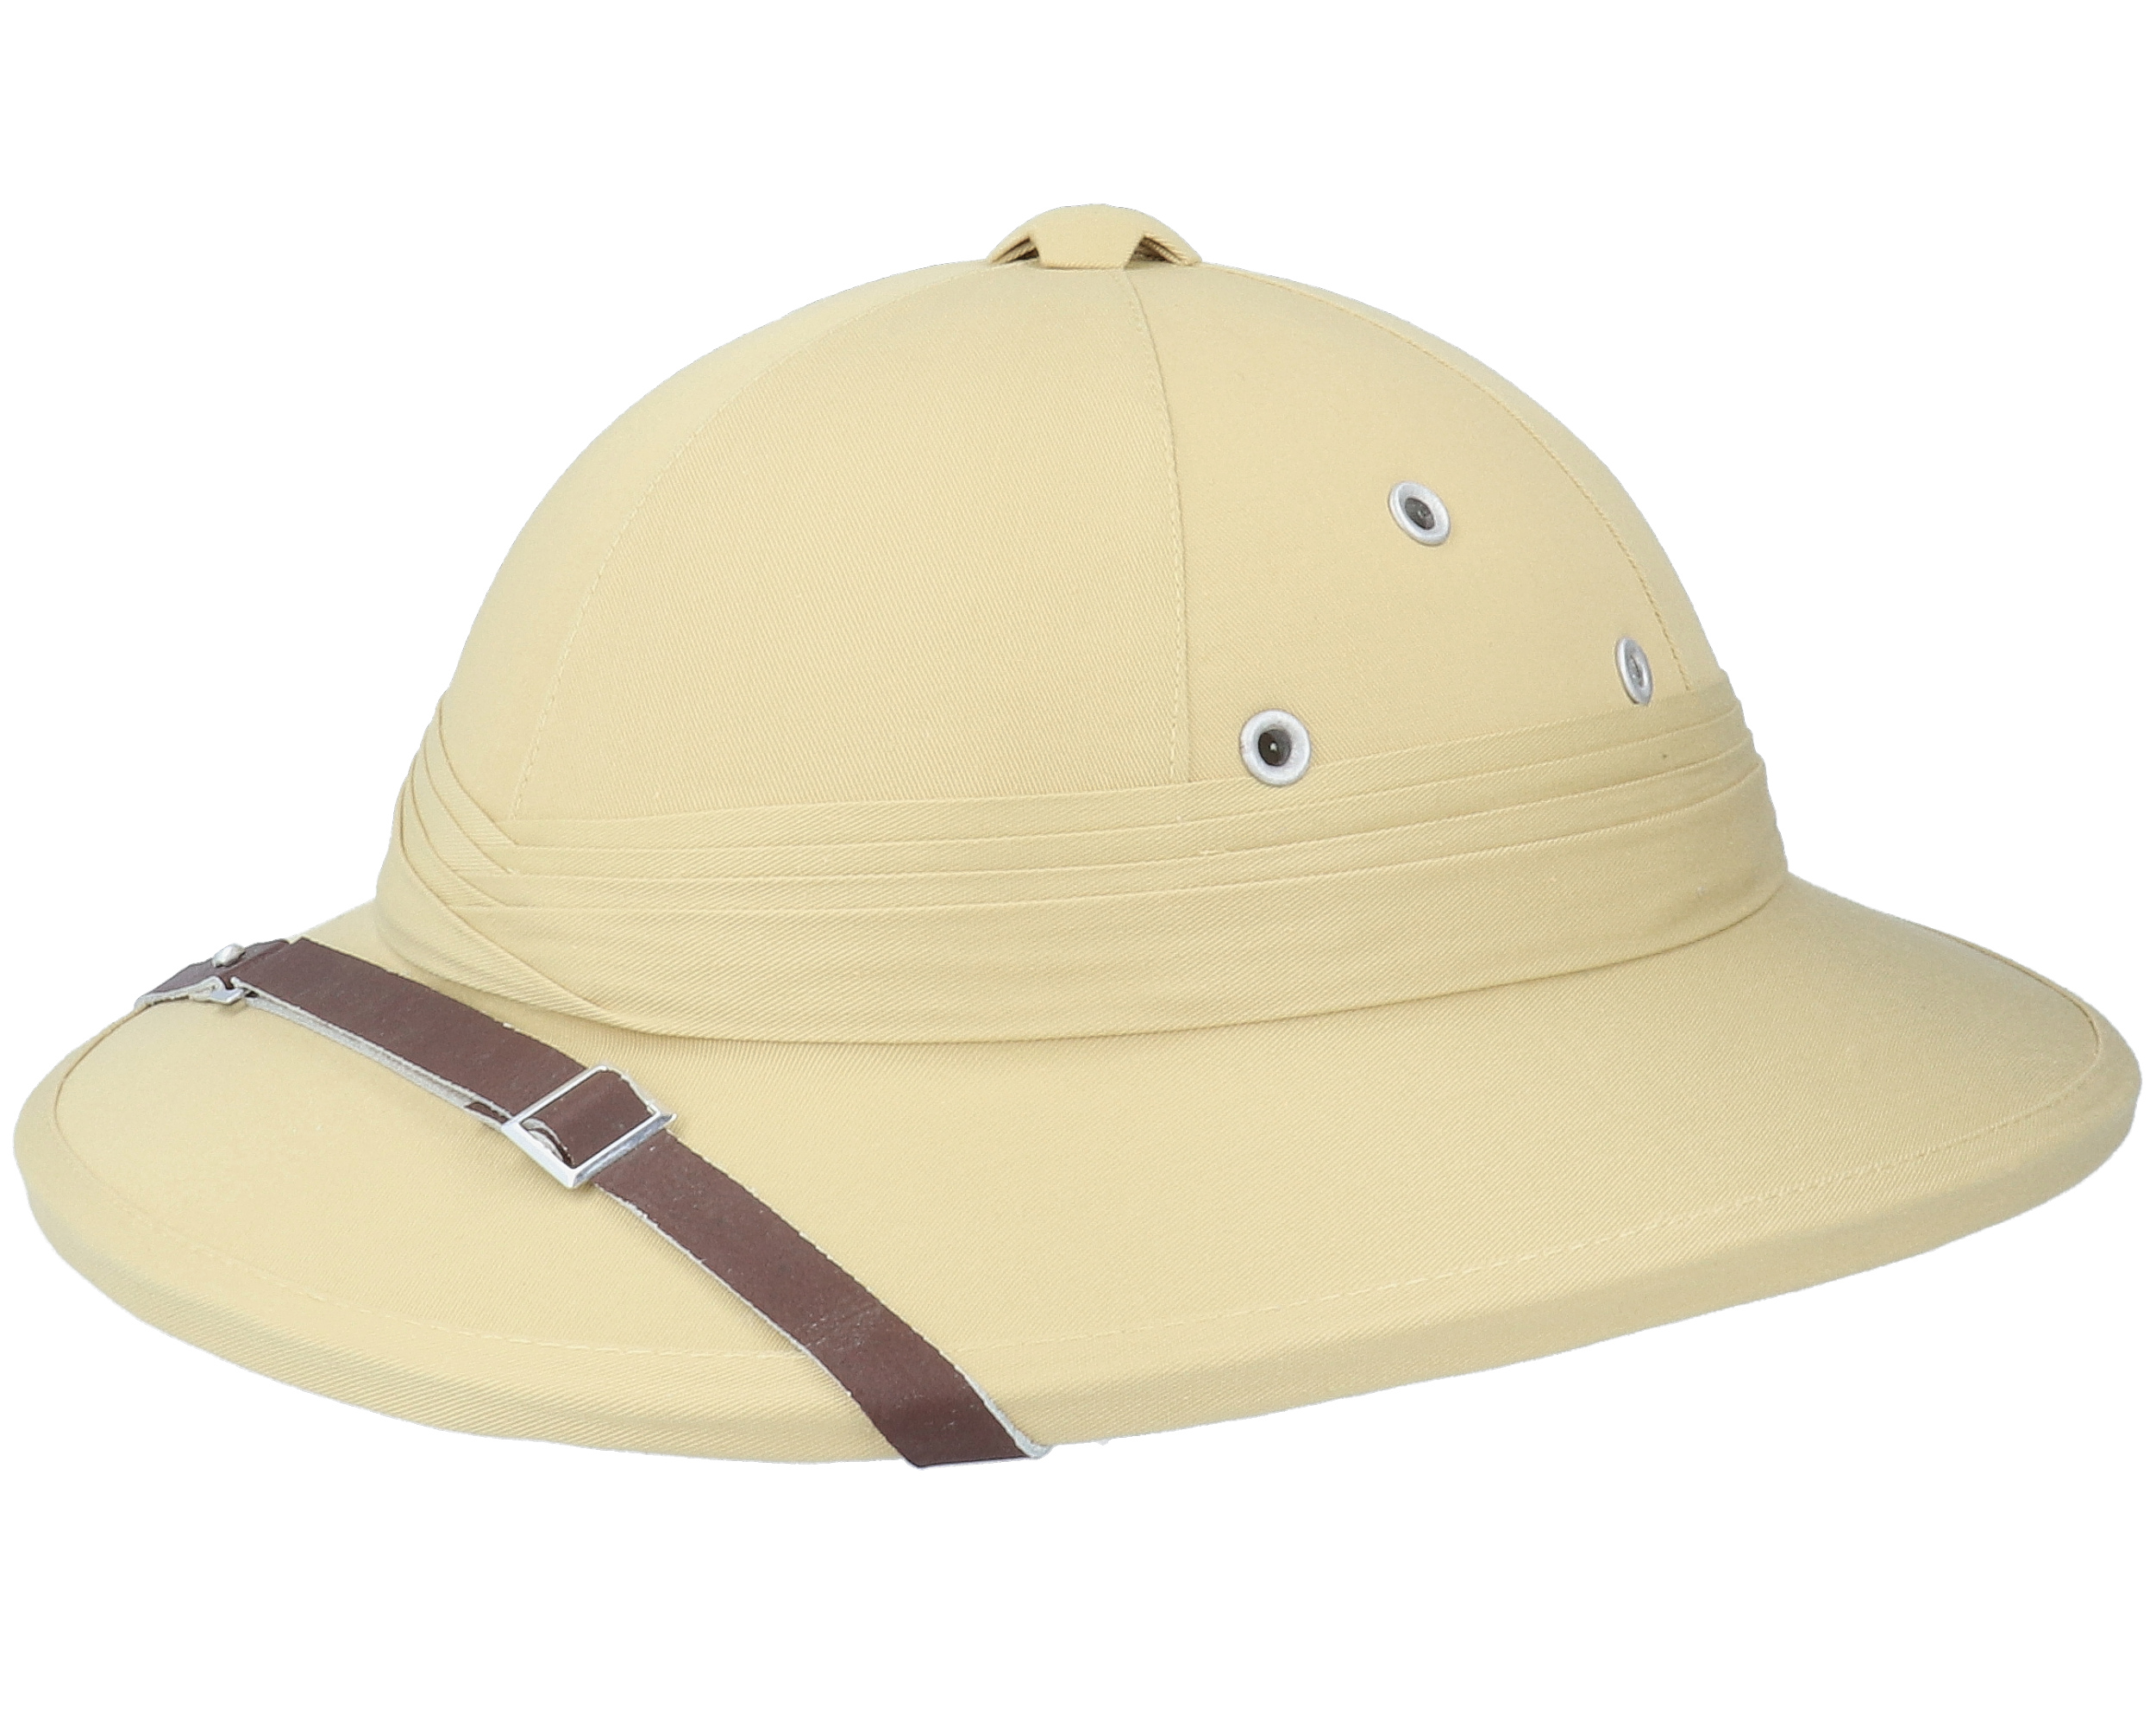 French Pith Helmet Safari Hat - Jaxon & hatte - Hatstore.dk